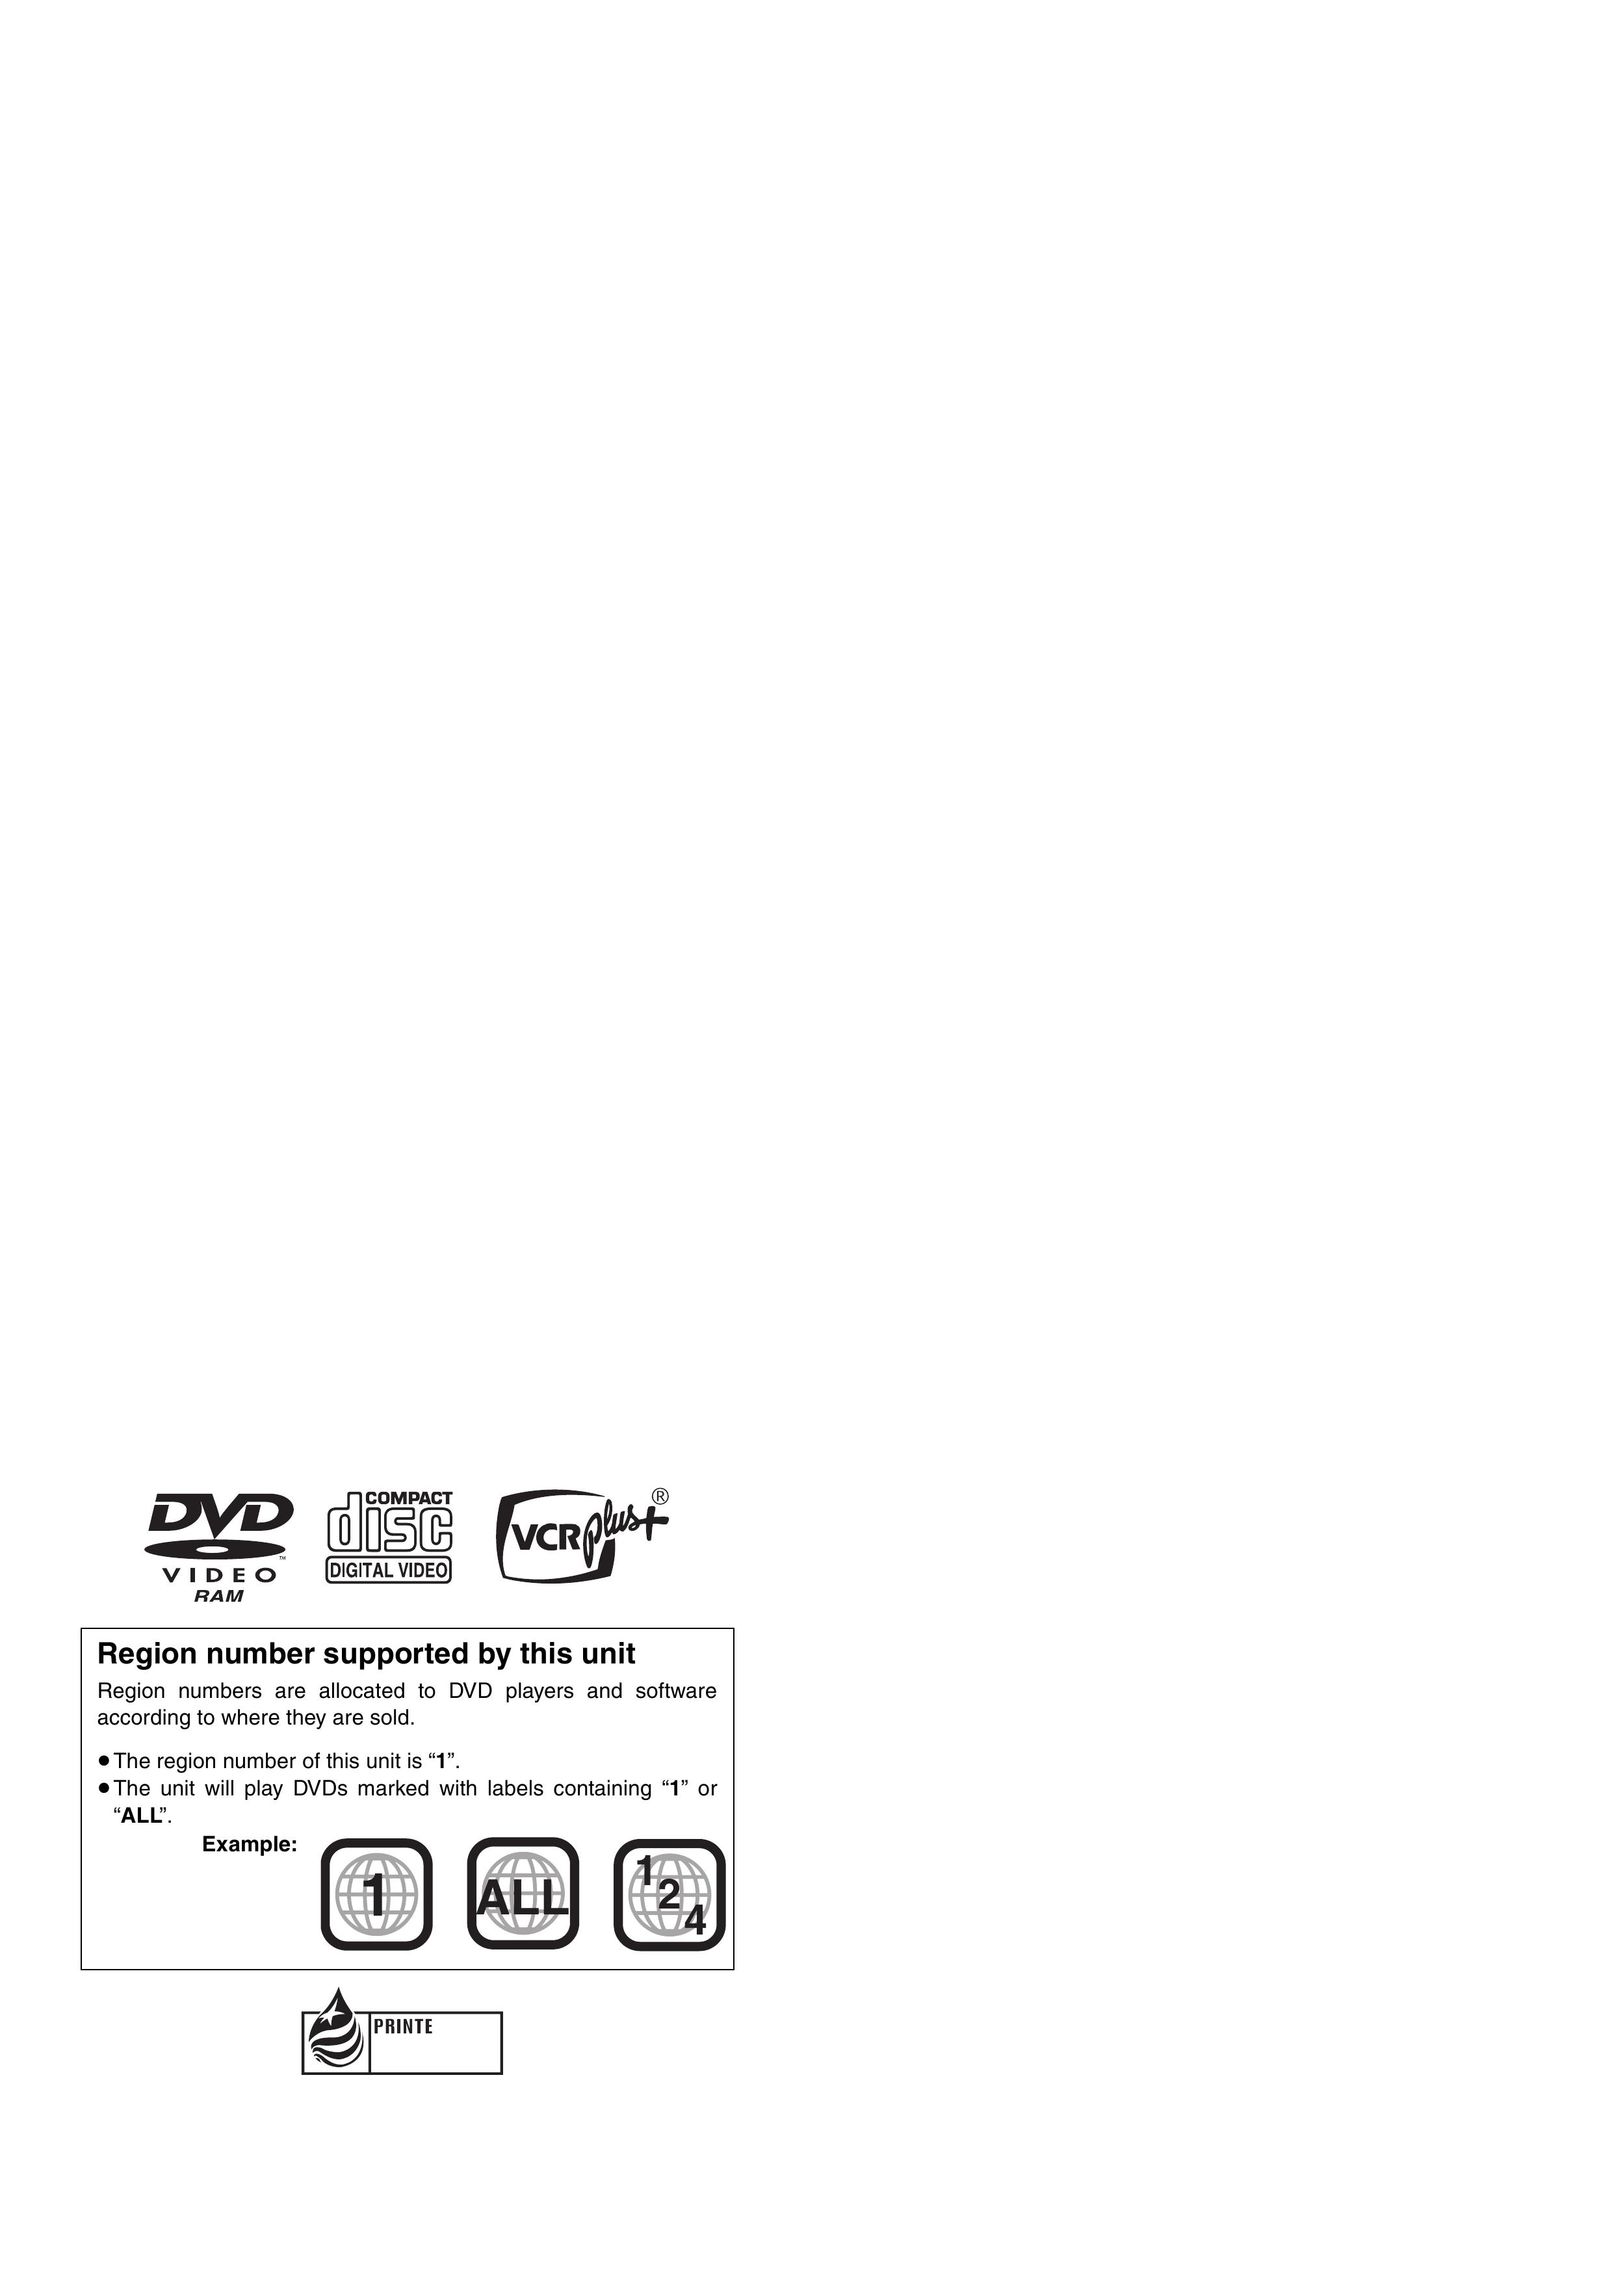 Panasonic DMR-E50 DVD Recorder User Manual